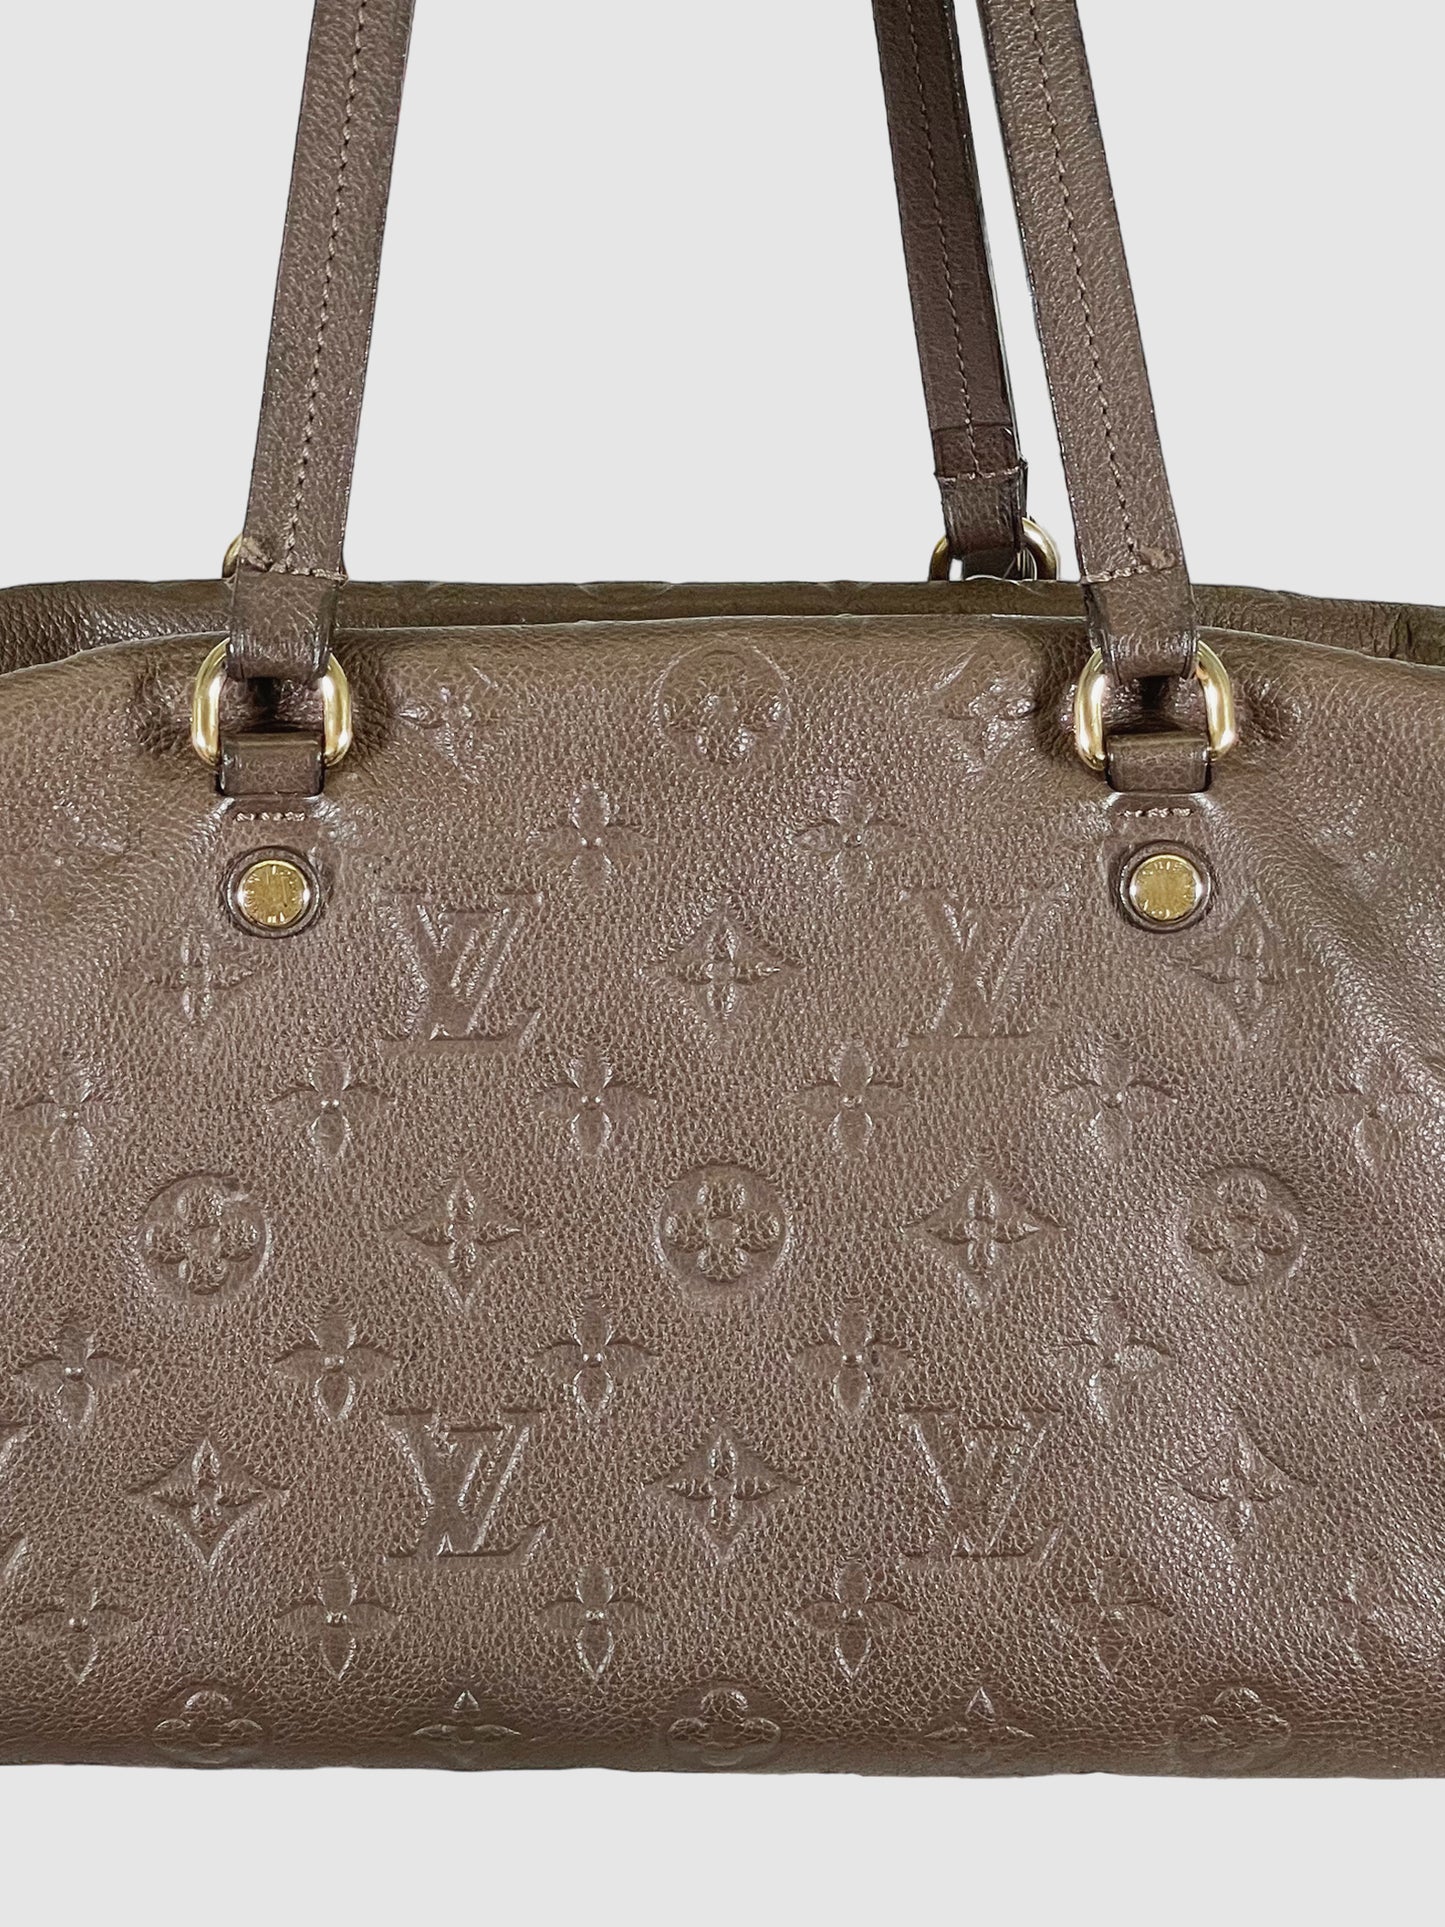 Louis Vuitton Monogram Empreinte Inspiree Bag